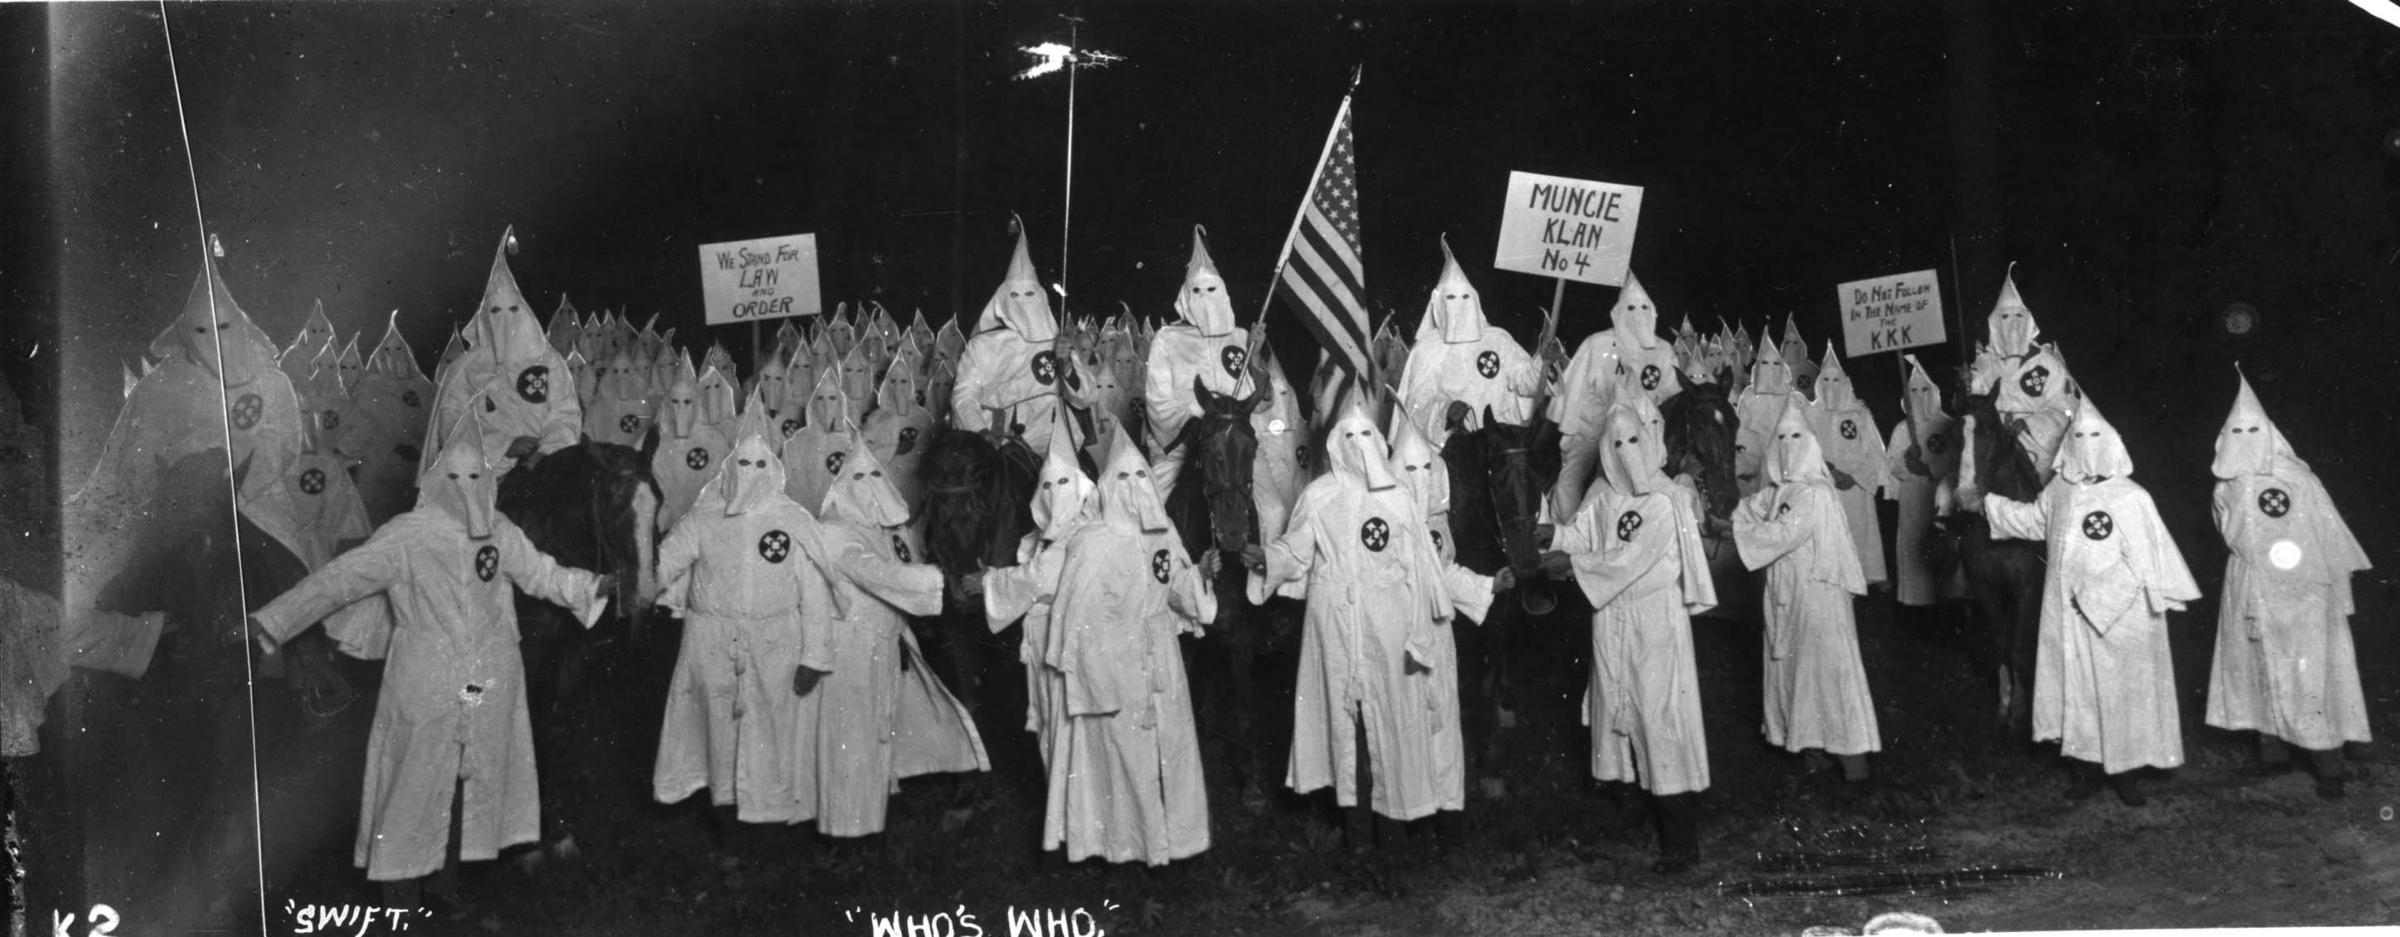 A KKK gathering of Muncie Klan No 4 in Muncie Indiana in 1922